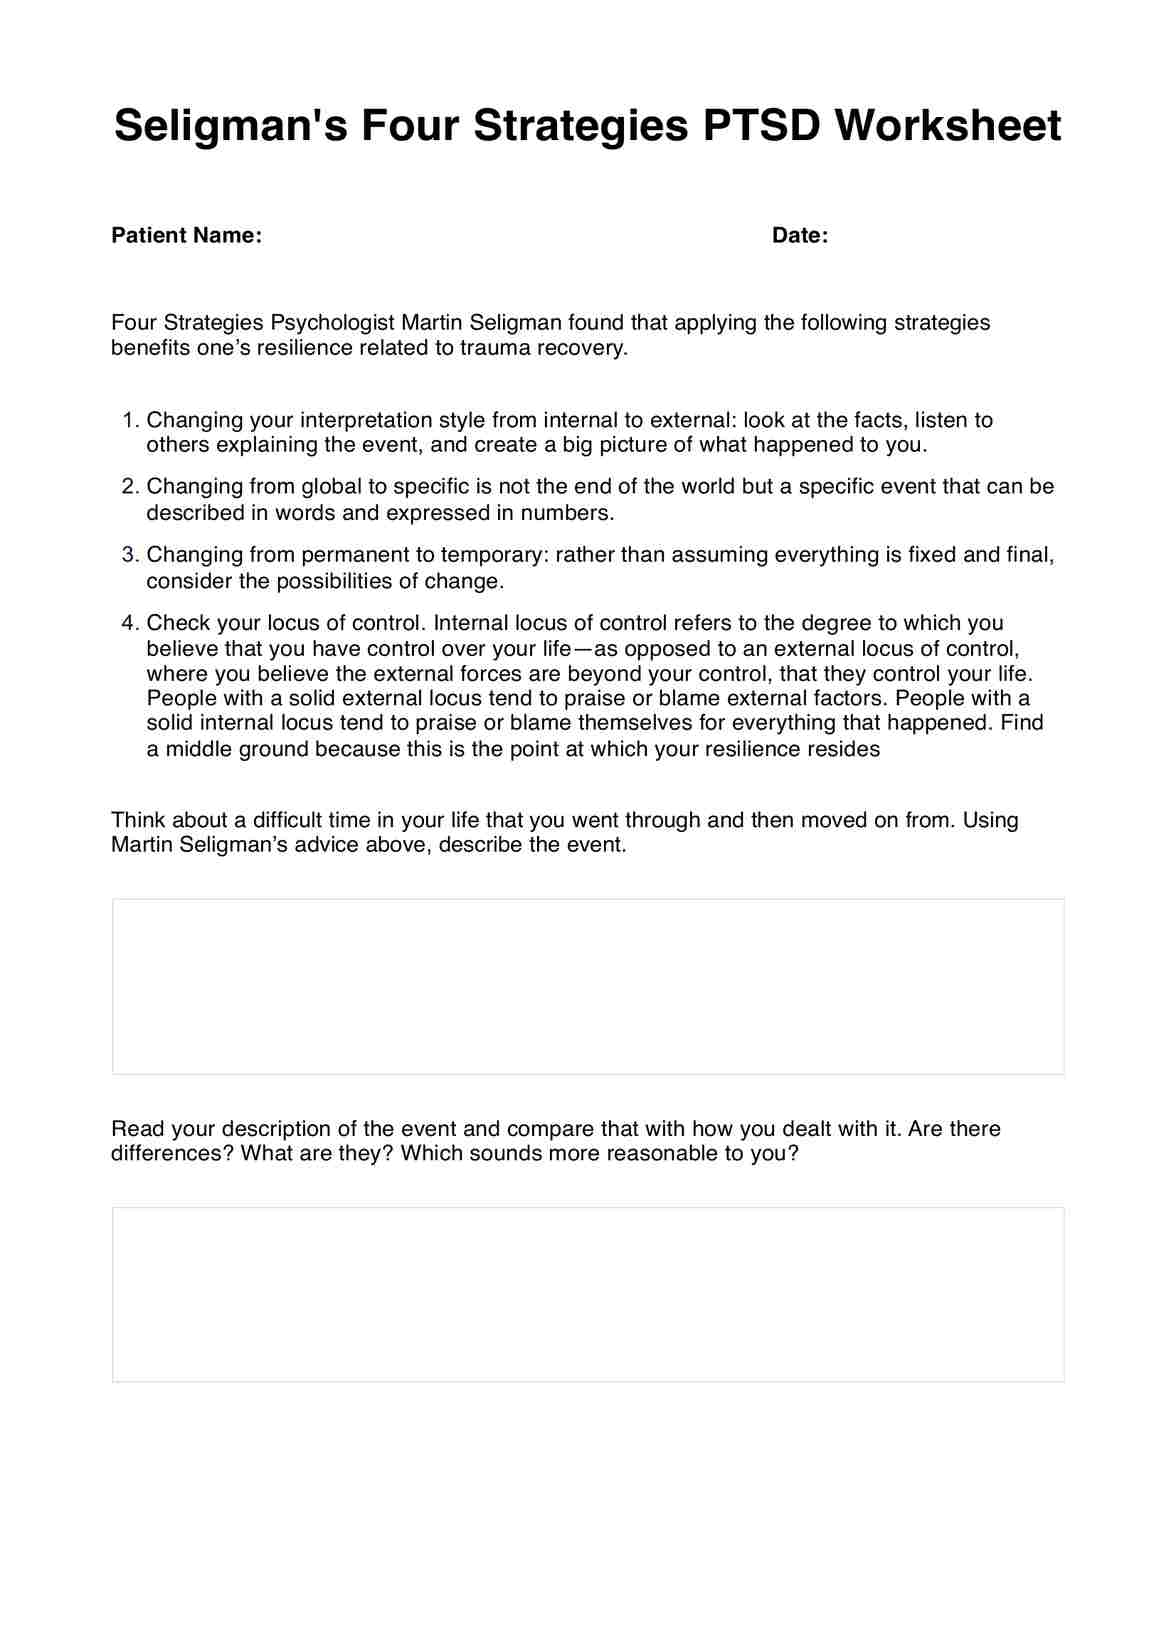 Seligman's Four Strategies PTSD Worksheet PDF Example